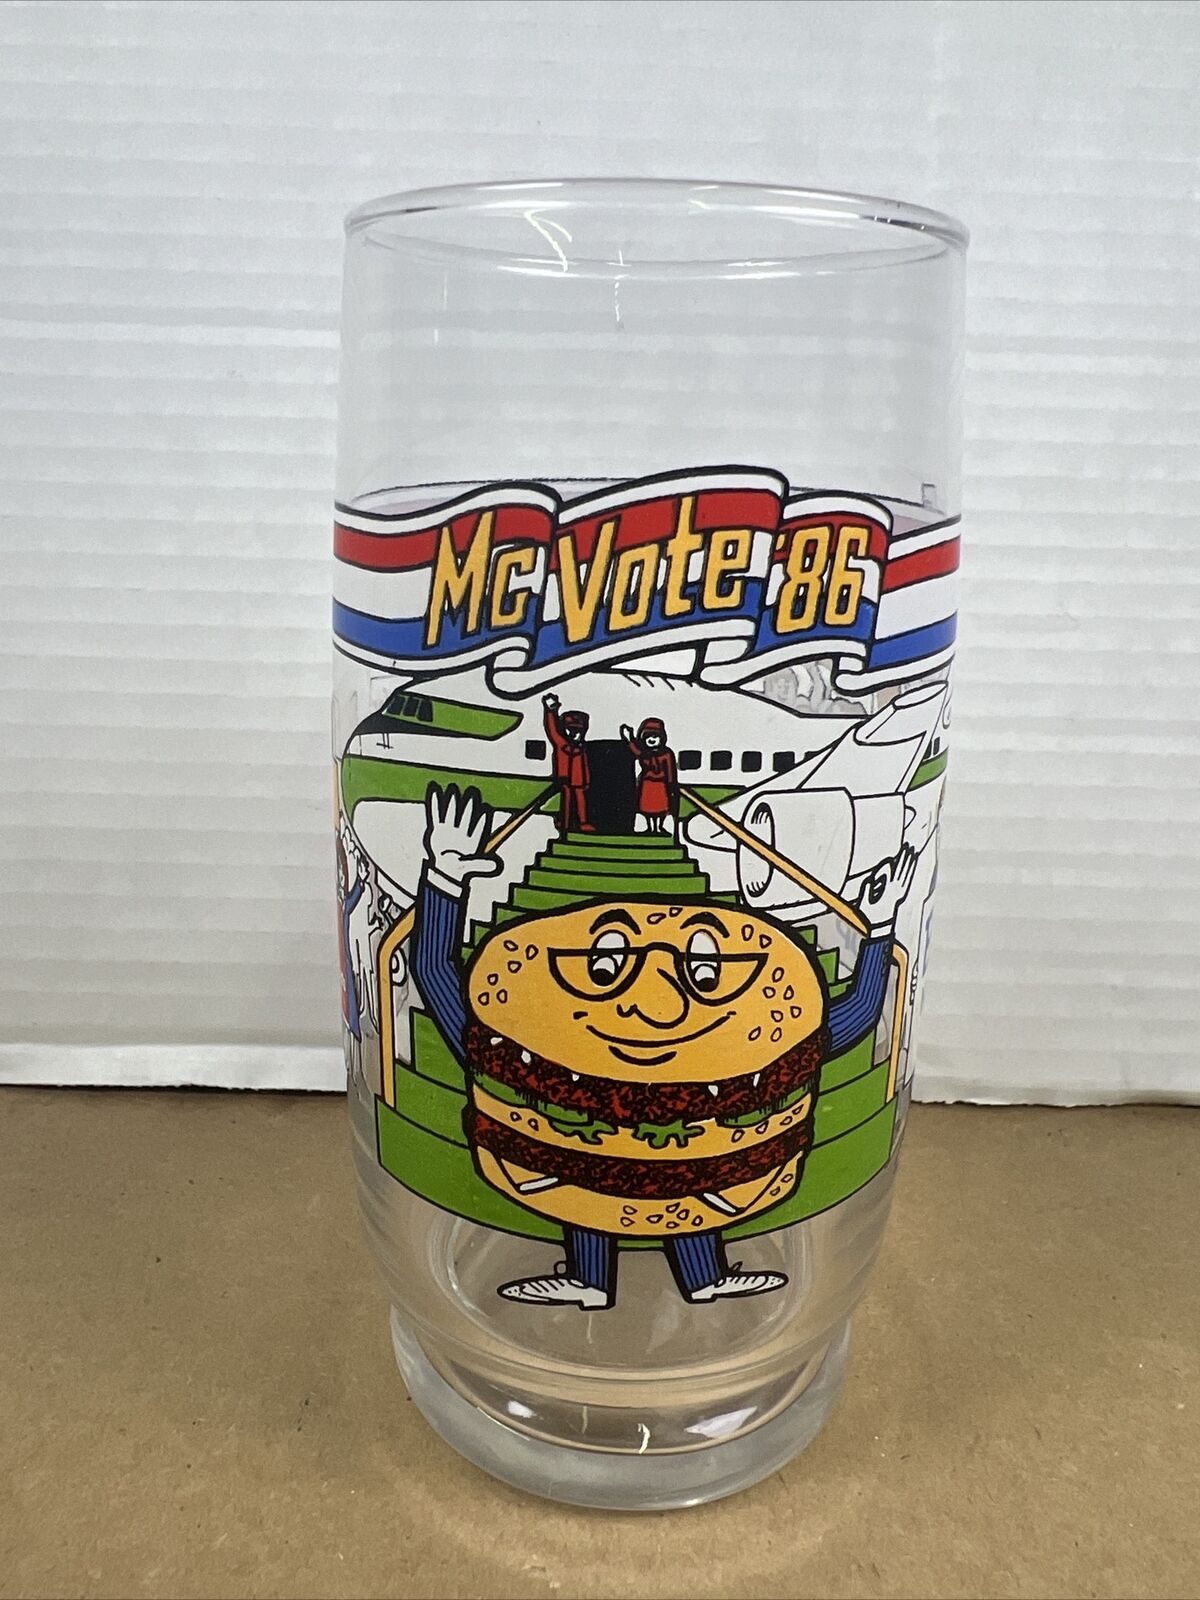 Vintage 80s 1986 Mcdonalds Hamburger McVote 86 Glass Cup Big Mac Collectible